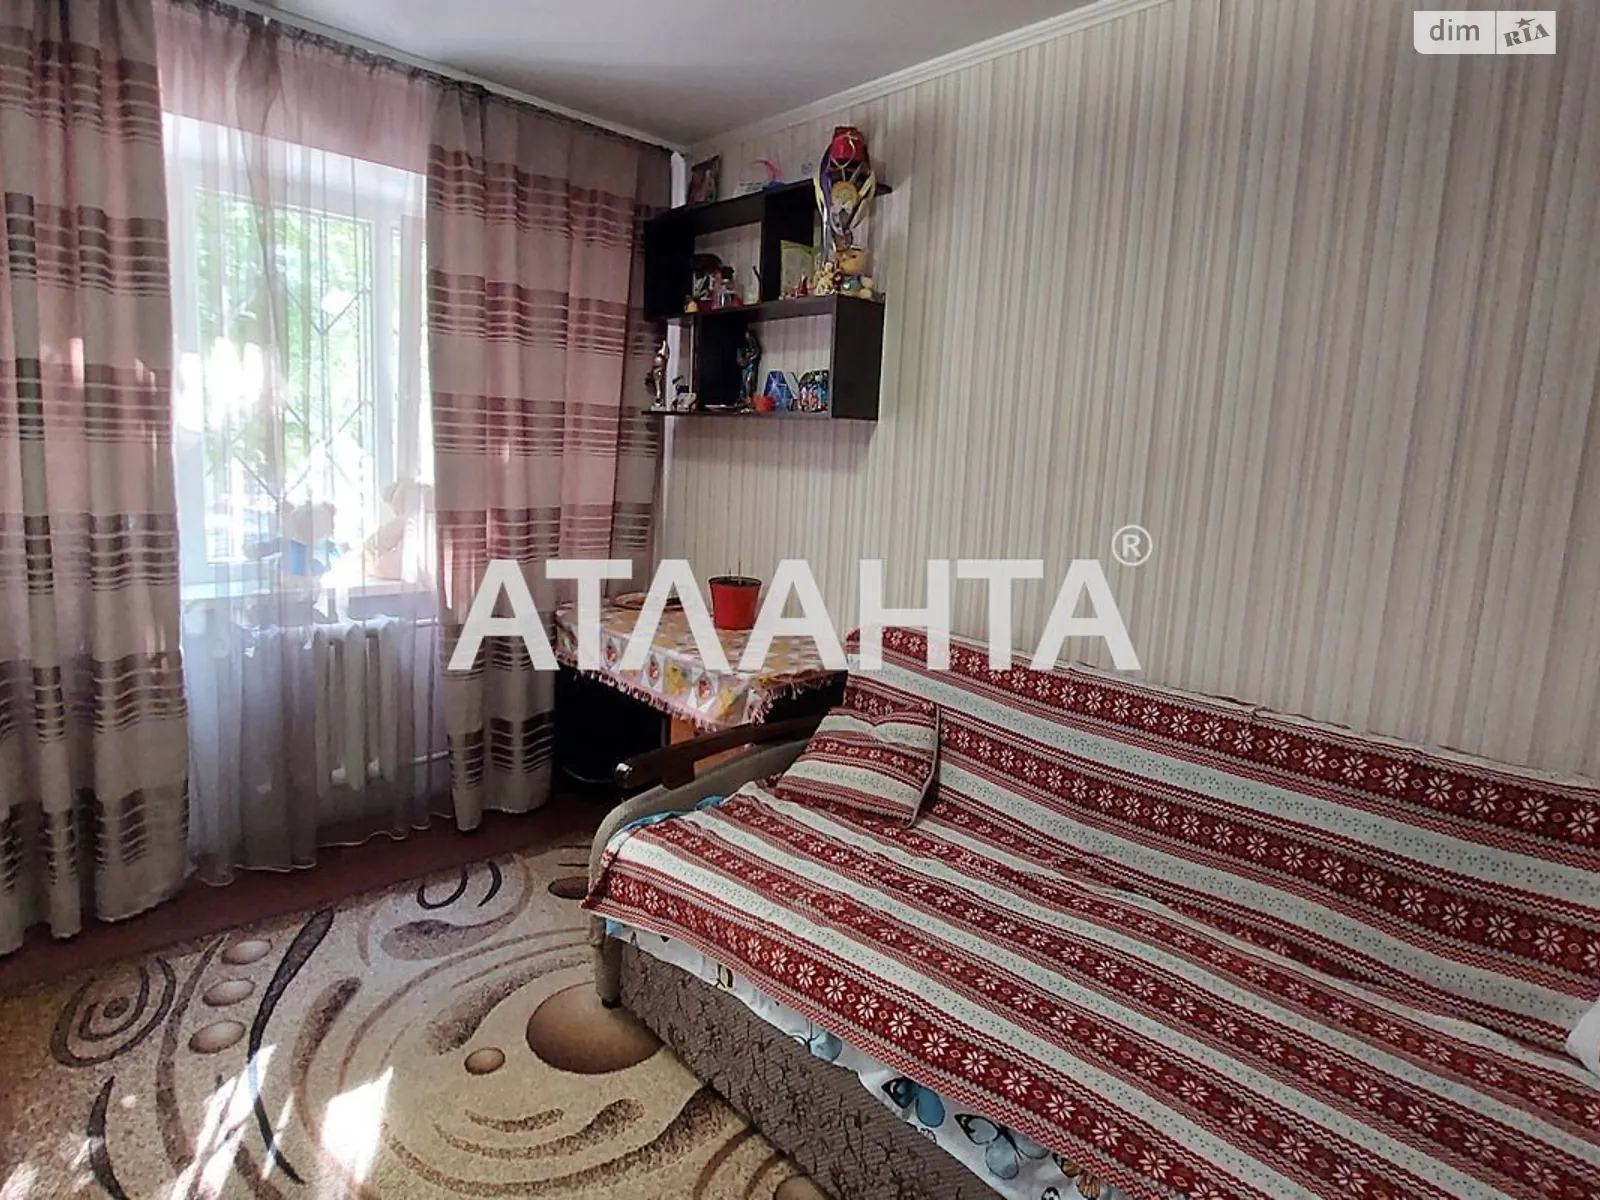 Продается комната 12 кв. м в Одессе, цена: 7000 $ - фото 1